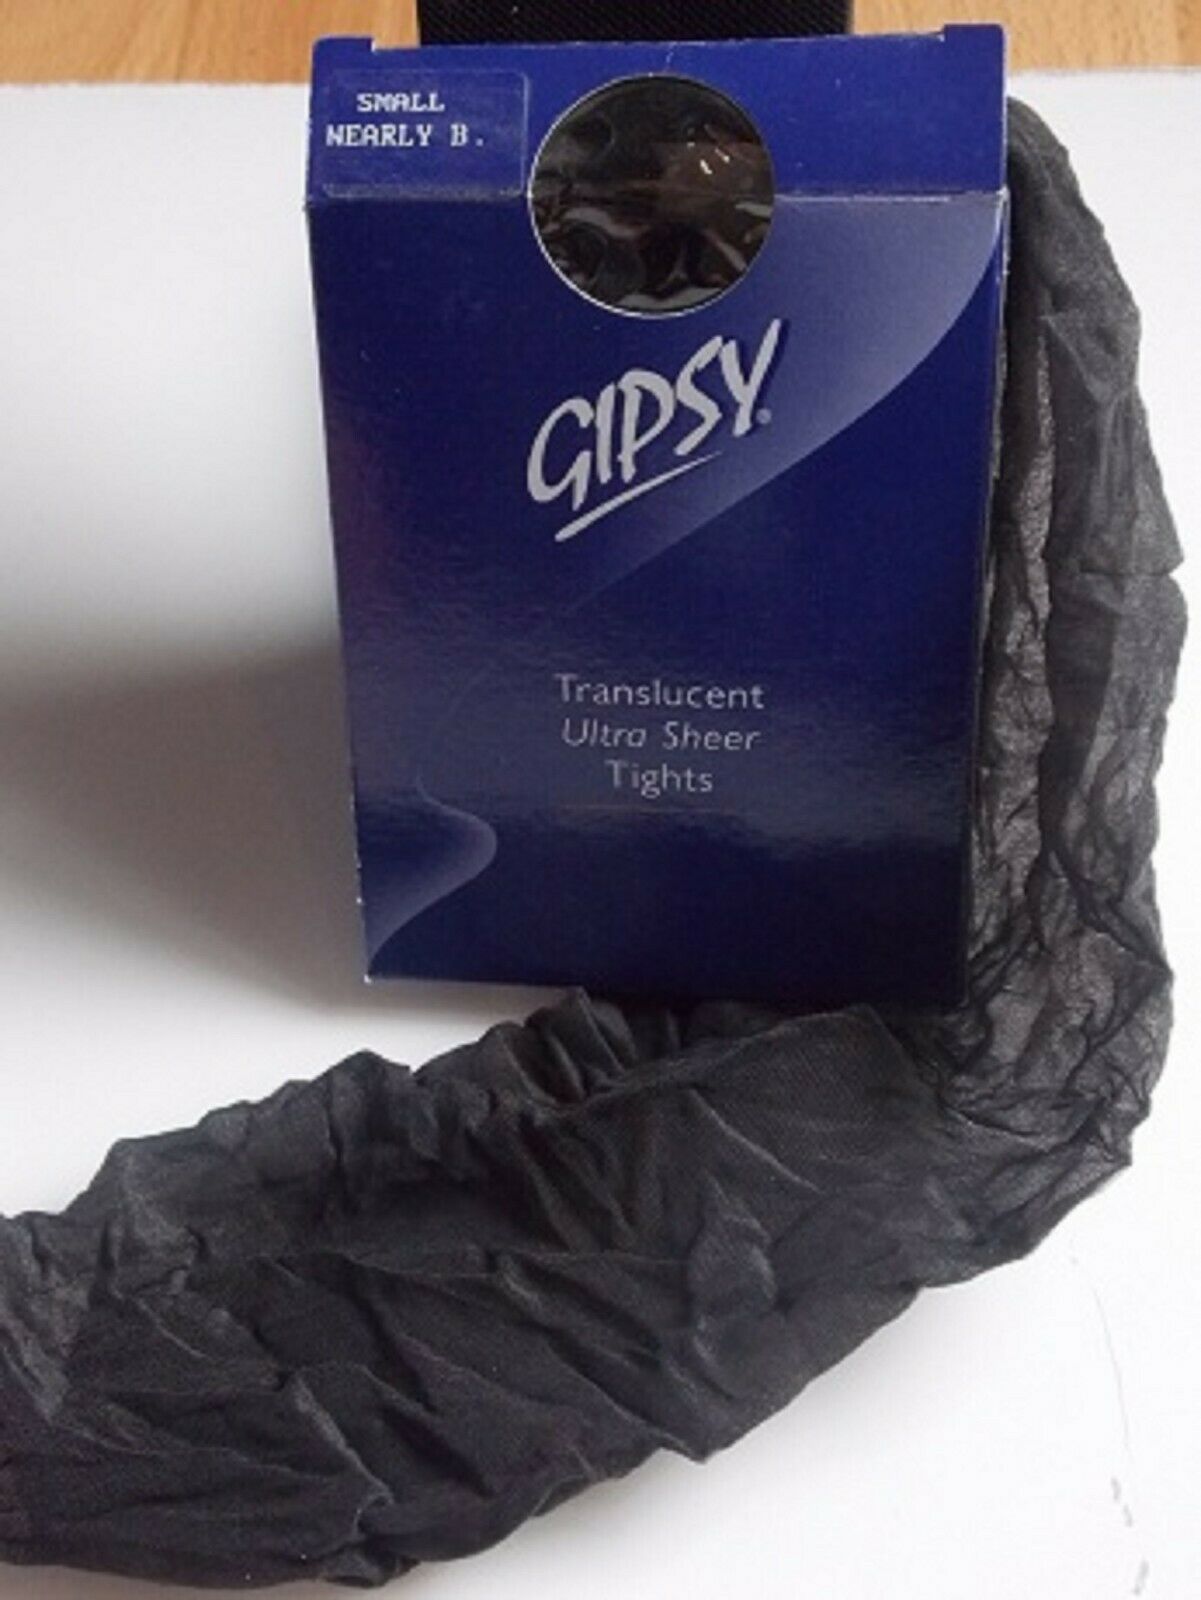 Gipsy Translucent Ultra Sheer